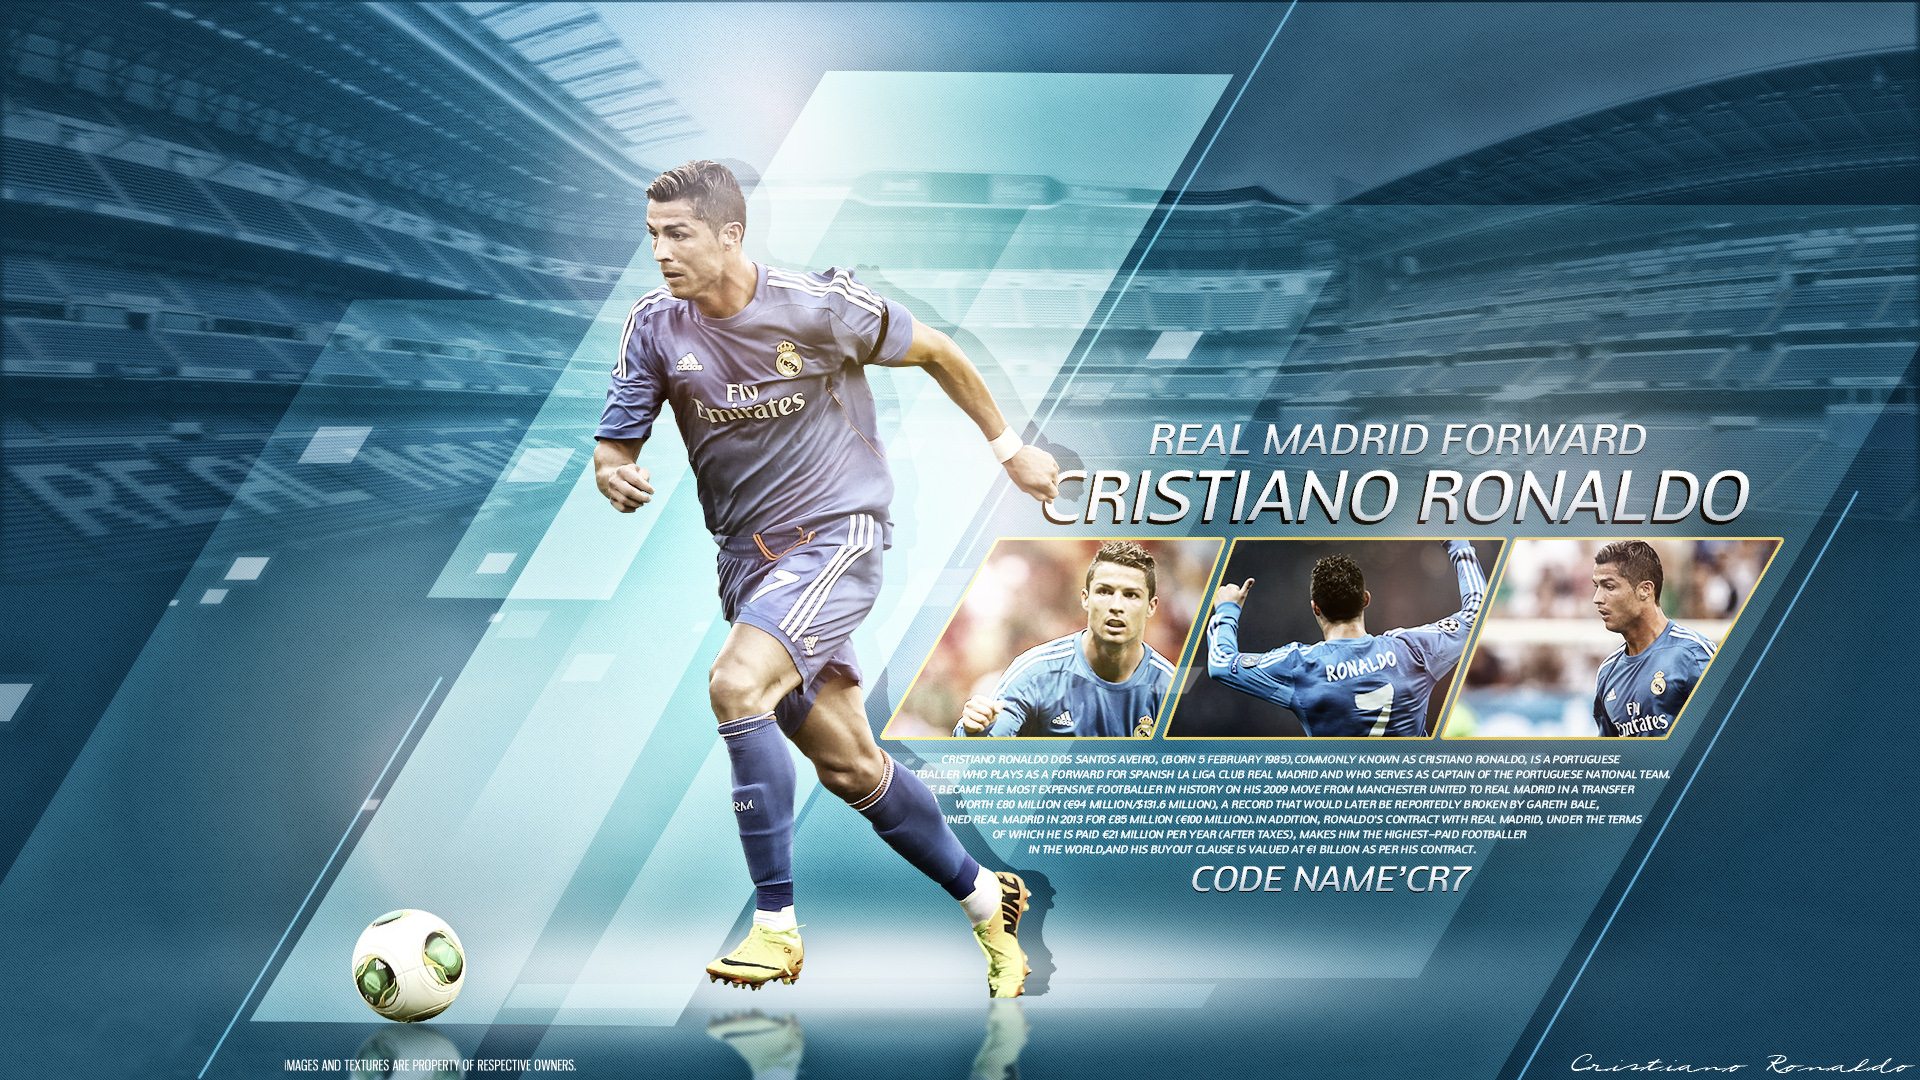 Wallpaper Real Madrid Forward Cr7 Cristiano Ronaldo Fan Site